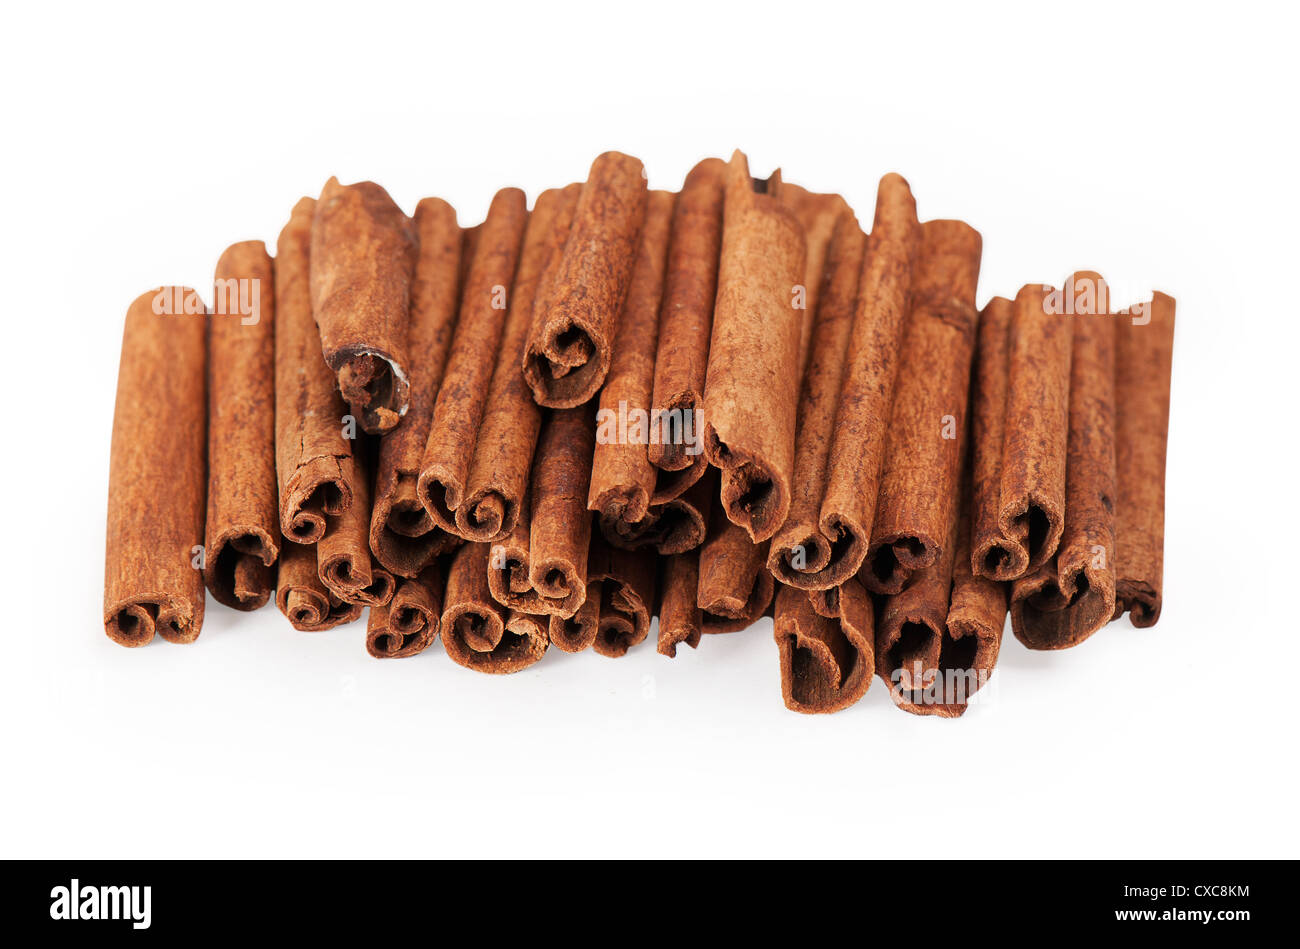 cinnamon sticks isolated on white background Stock Photo